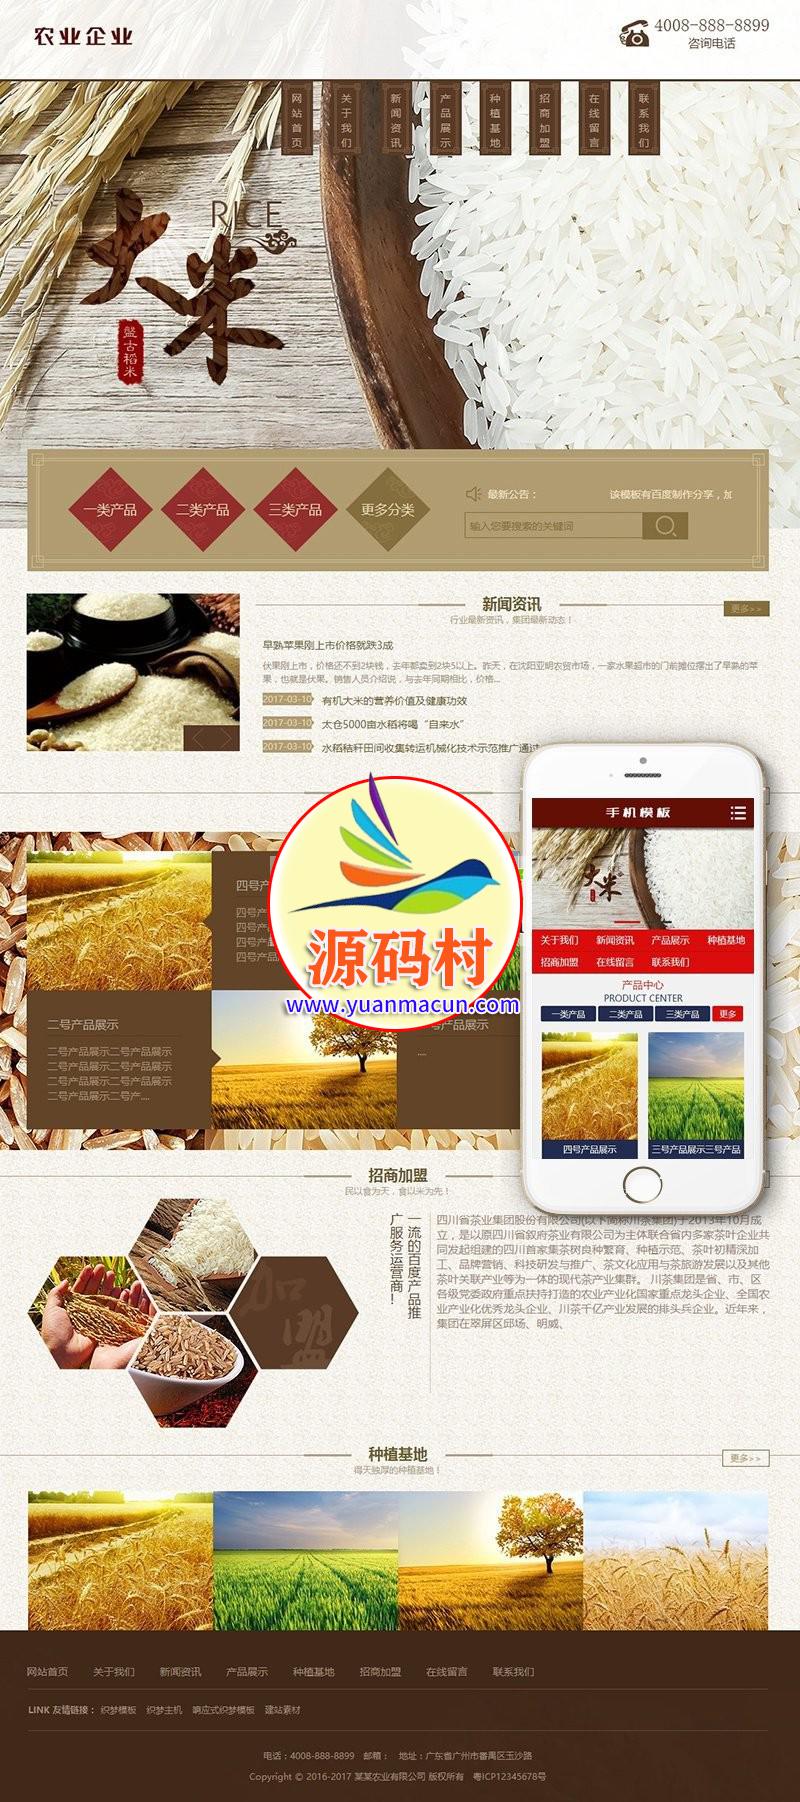 dedecms织梦谷类大米农作物农业网站源码(带手机端) 谷类大米农产品展示整站源码